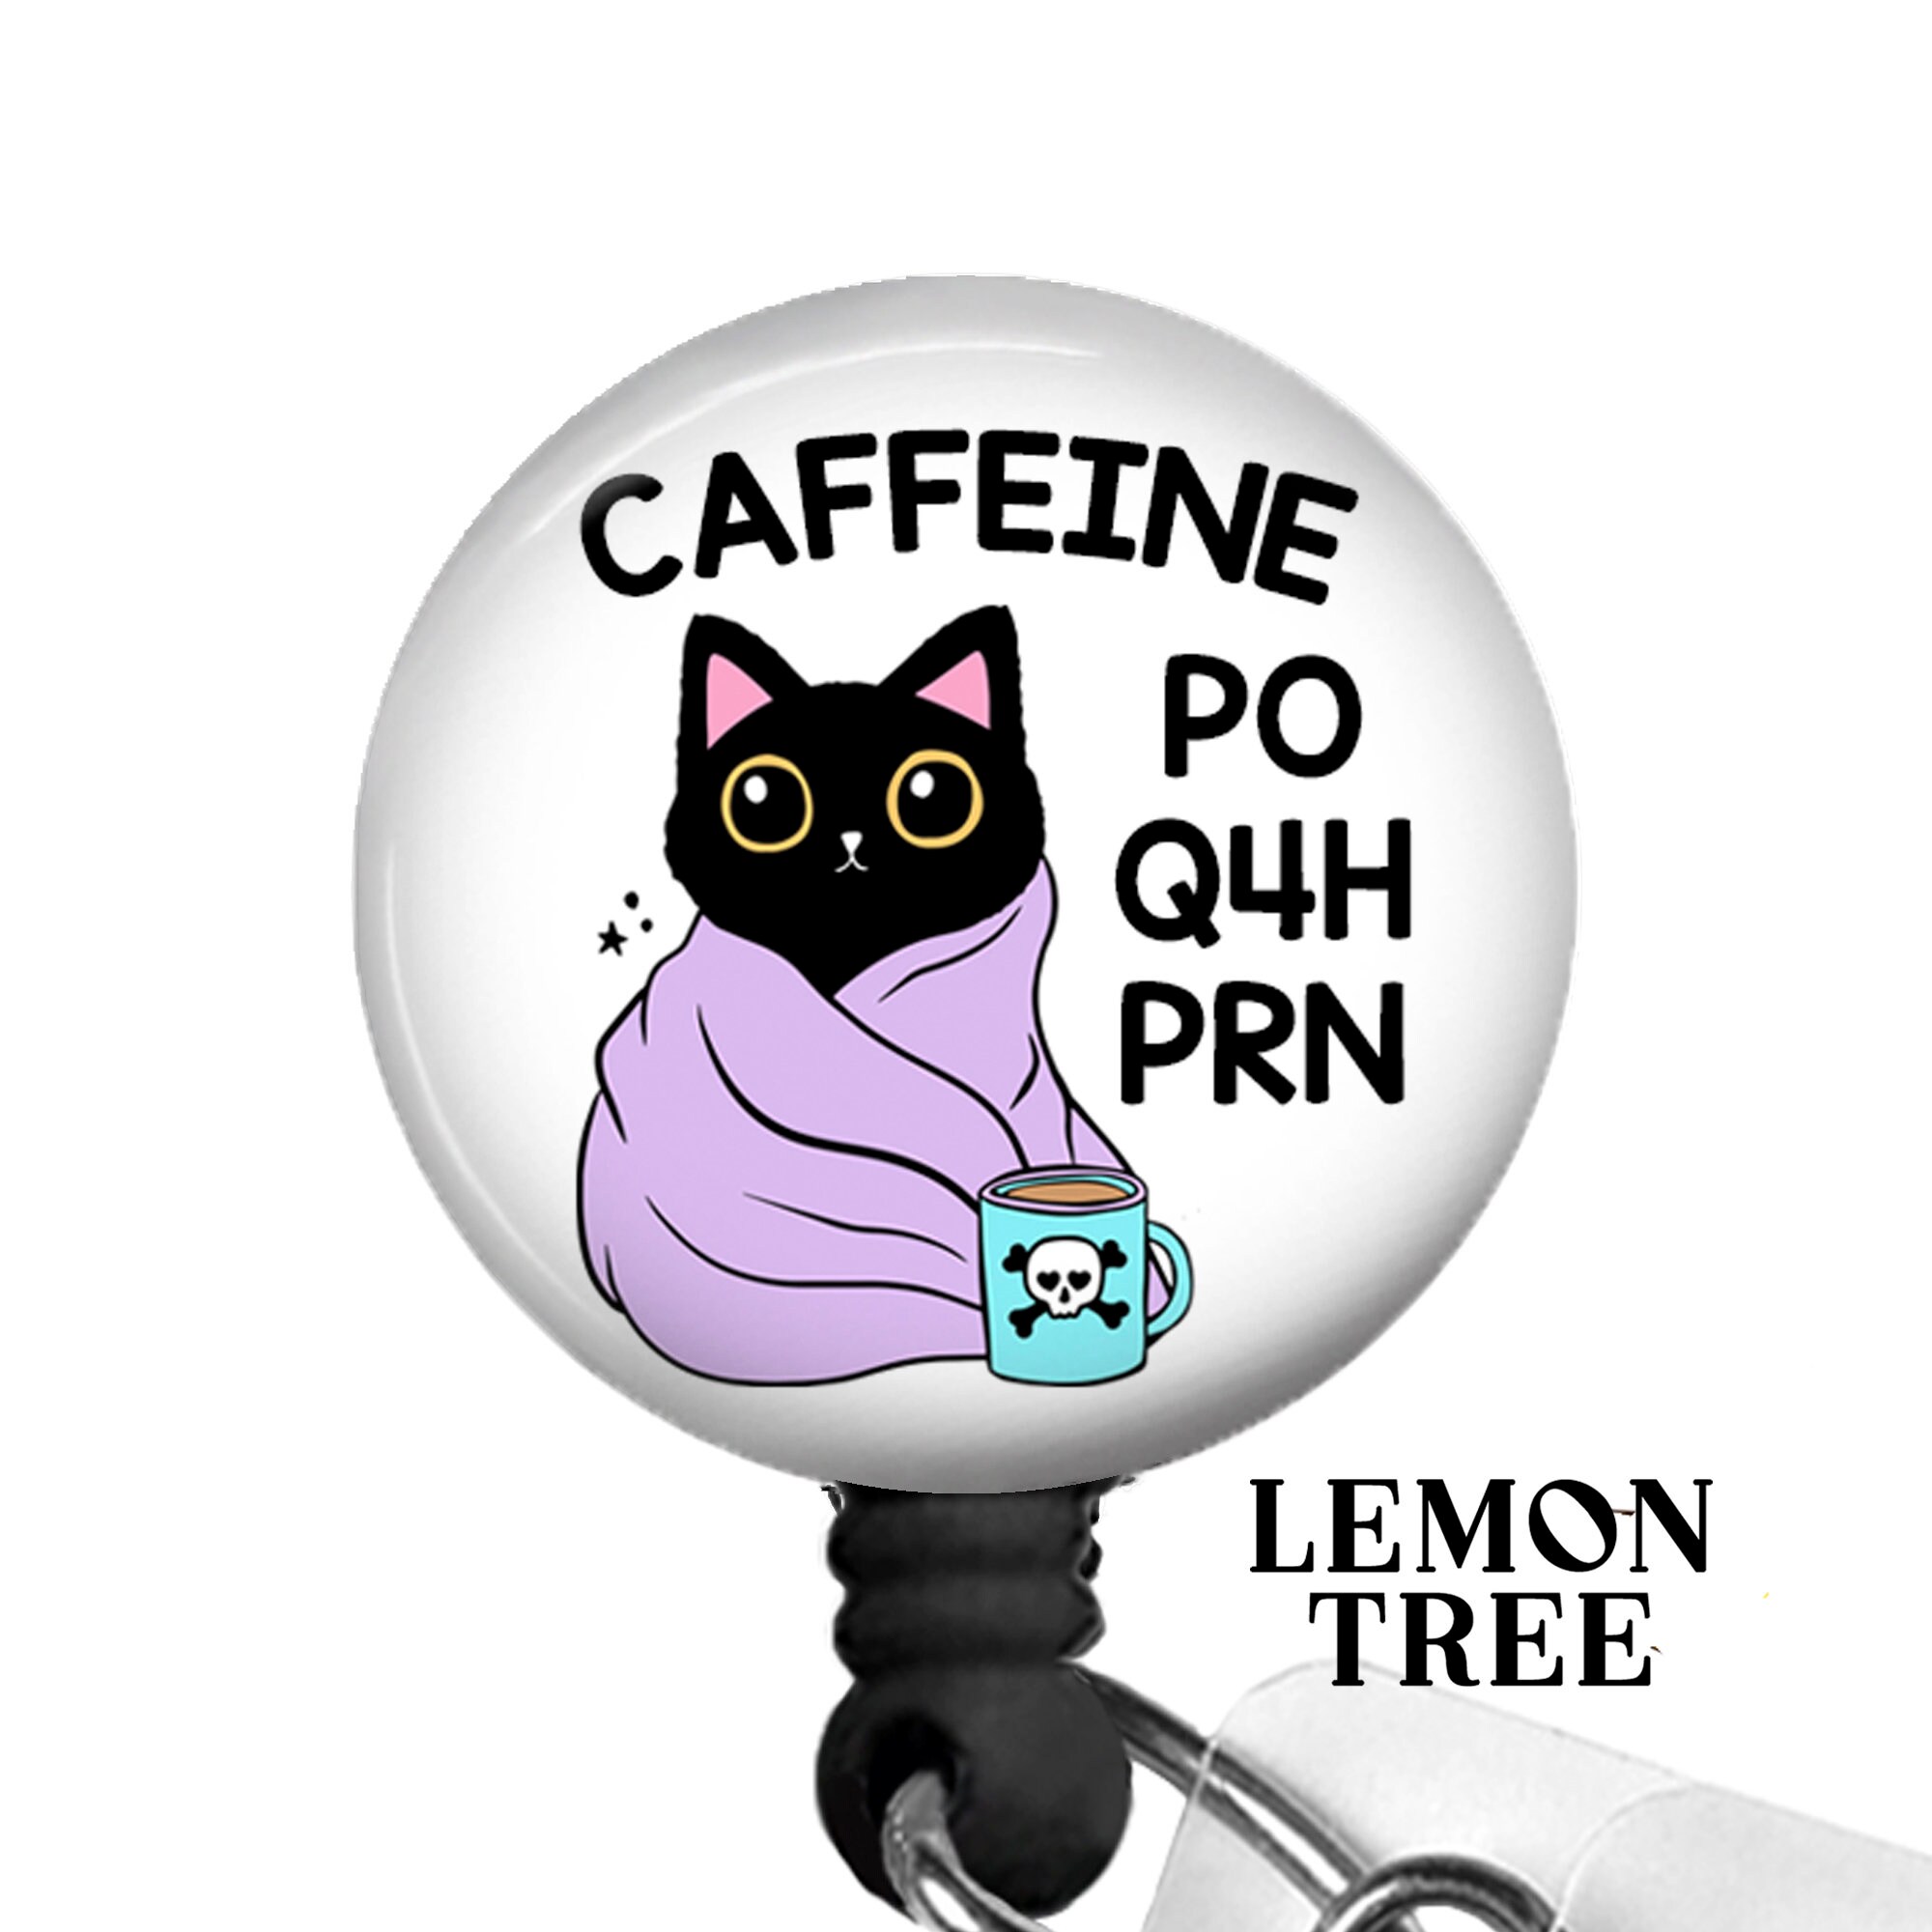 Funny Caffeine PO Q4H PRN Badge Reel Lanyard Carabiner Stethoscope Name Tag  Nurse Gift 